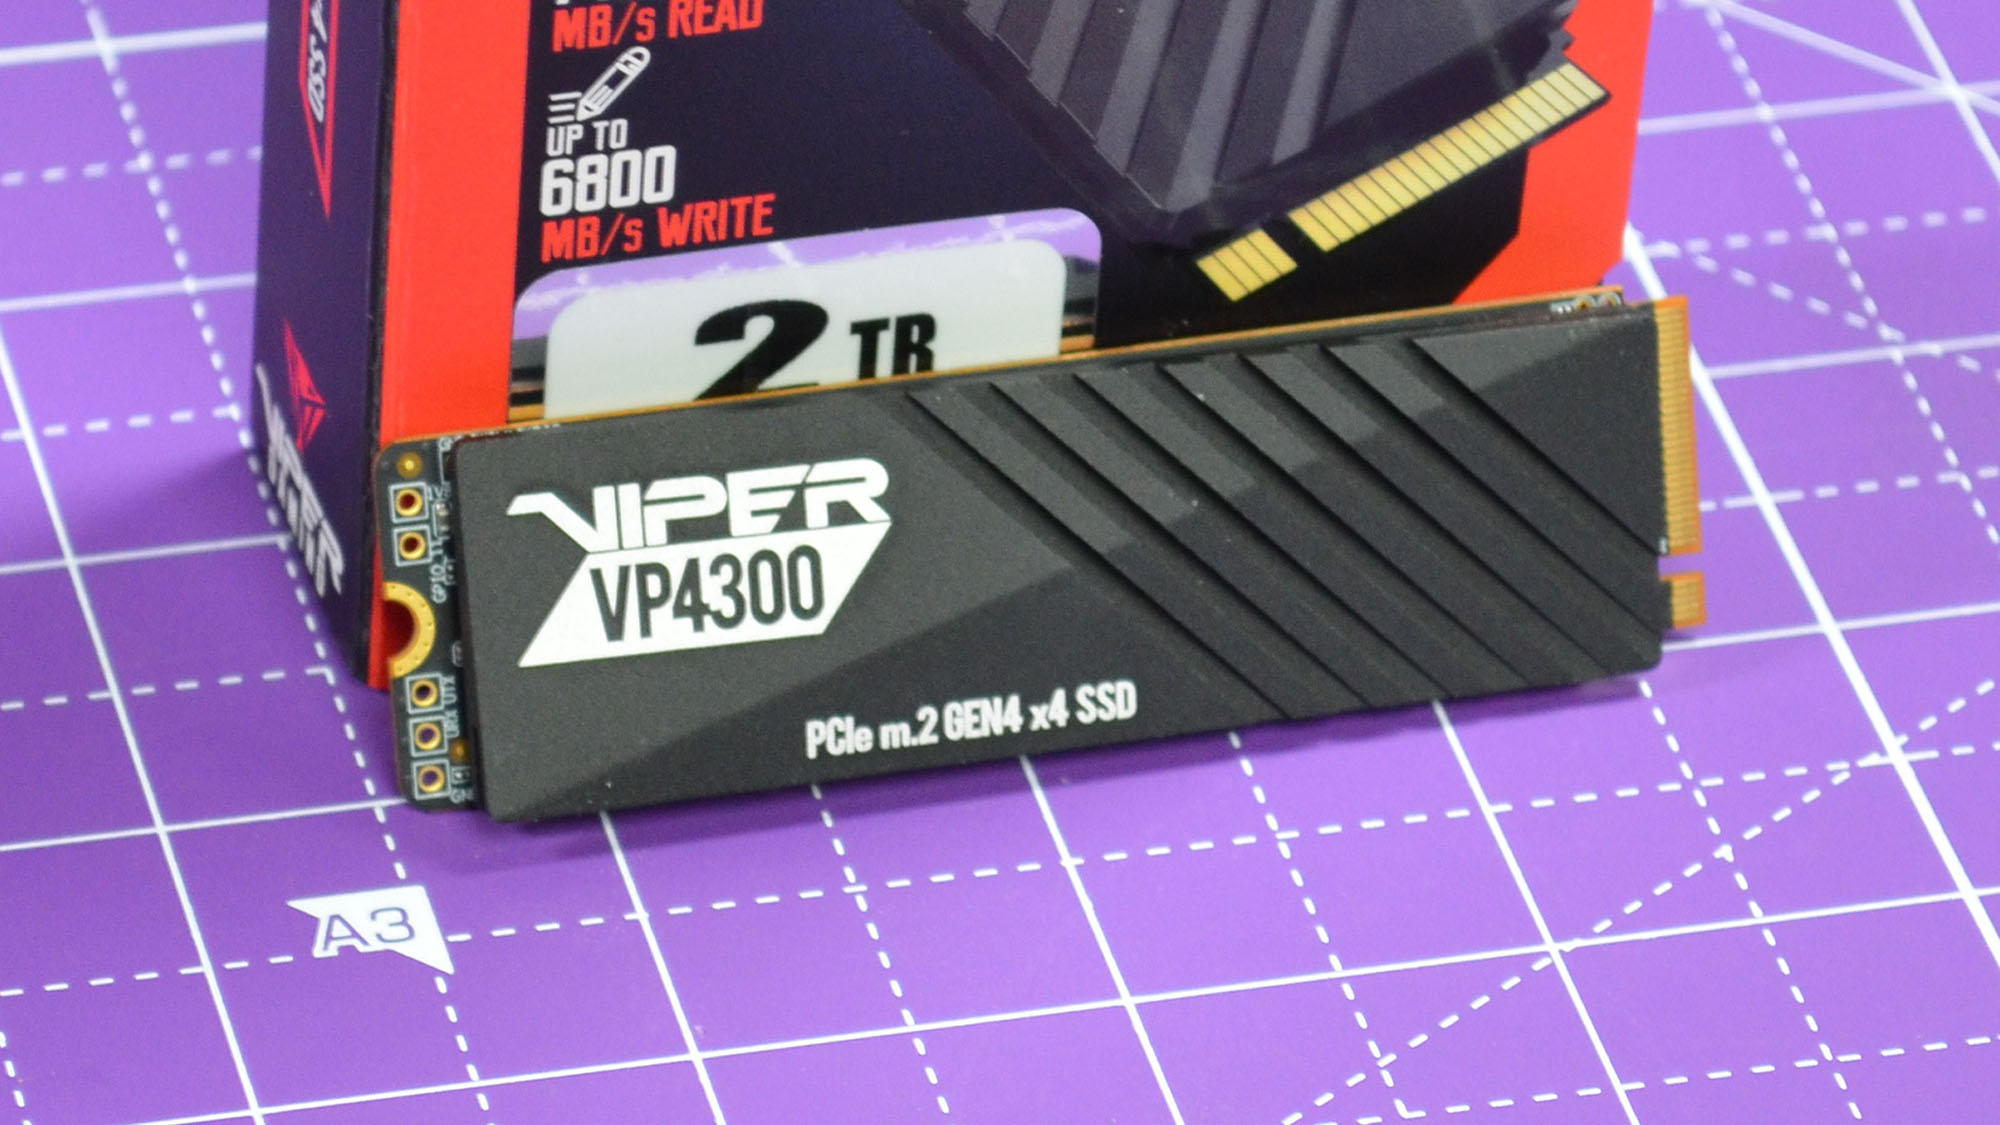 A Patriot Viper VP4300 on a purple desk mat